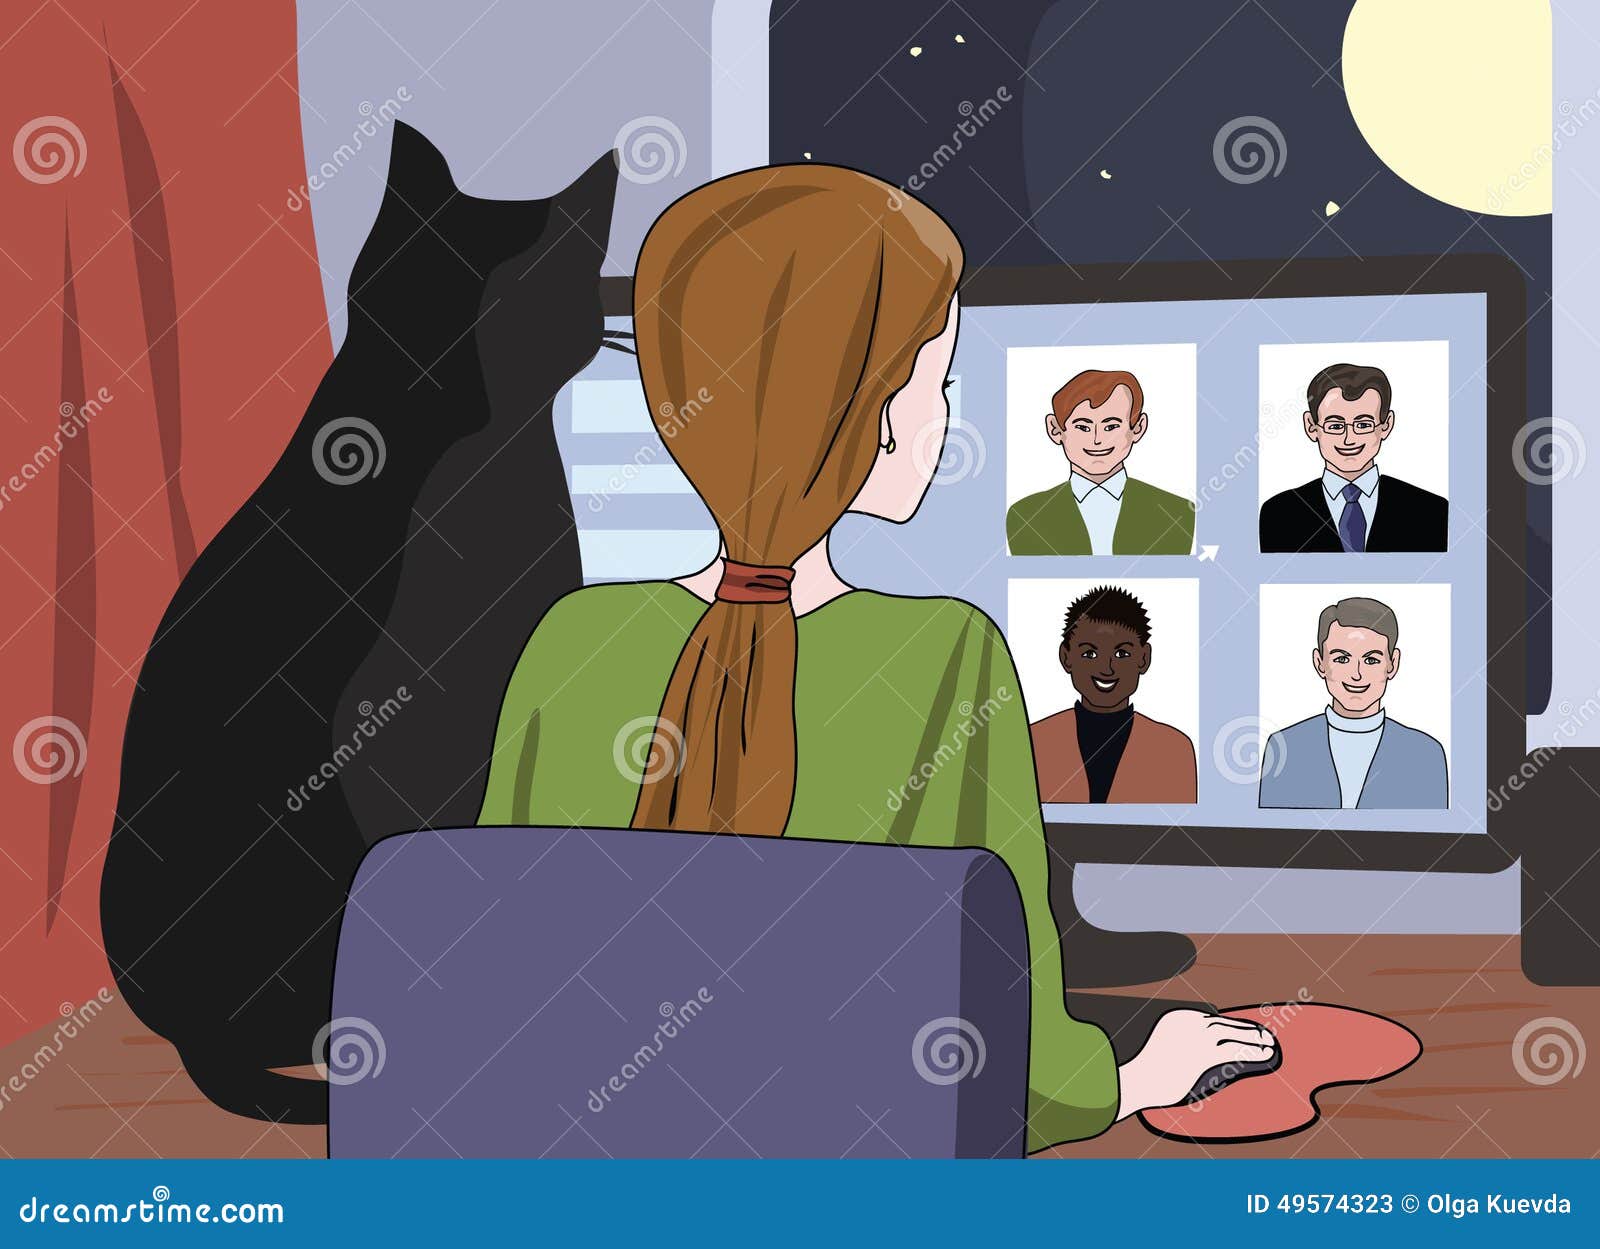 cat online dating)